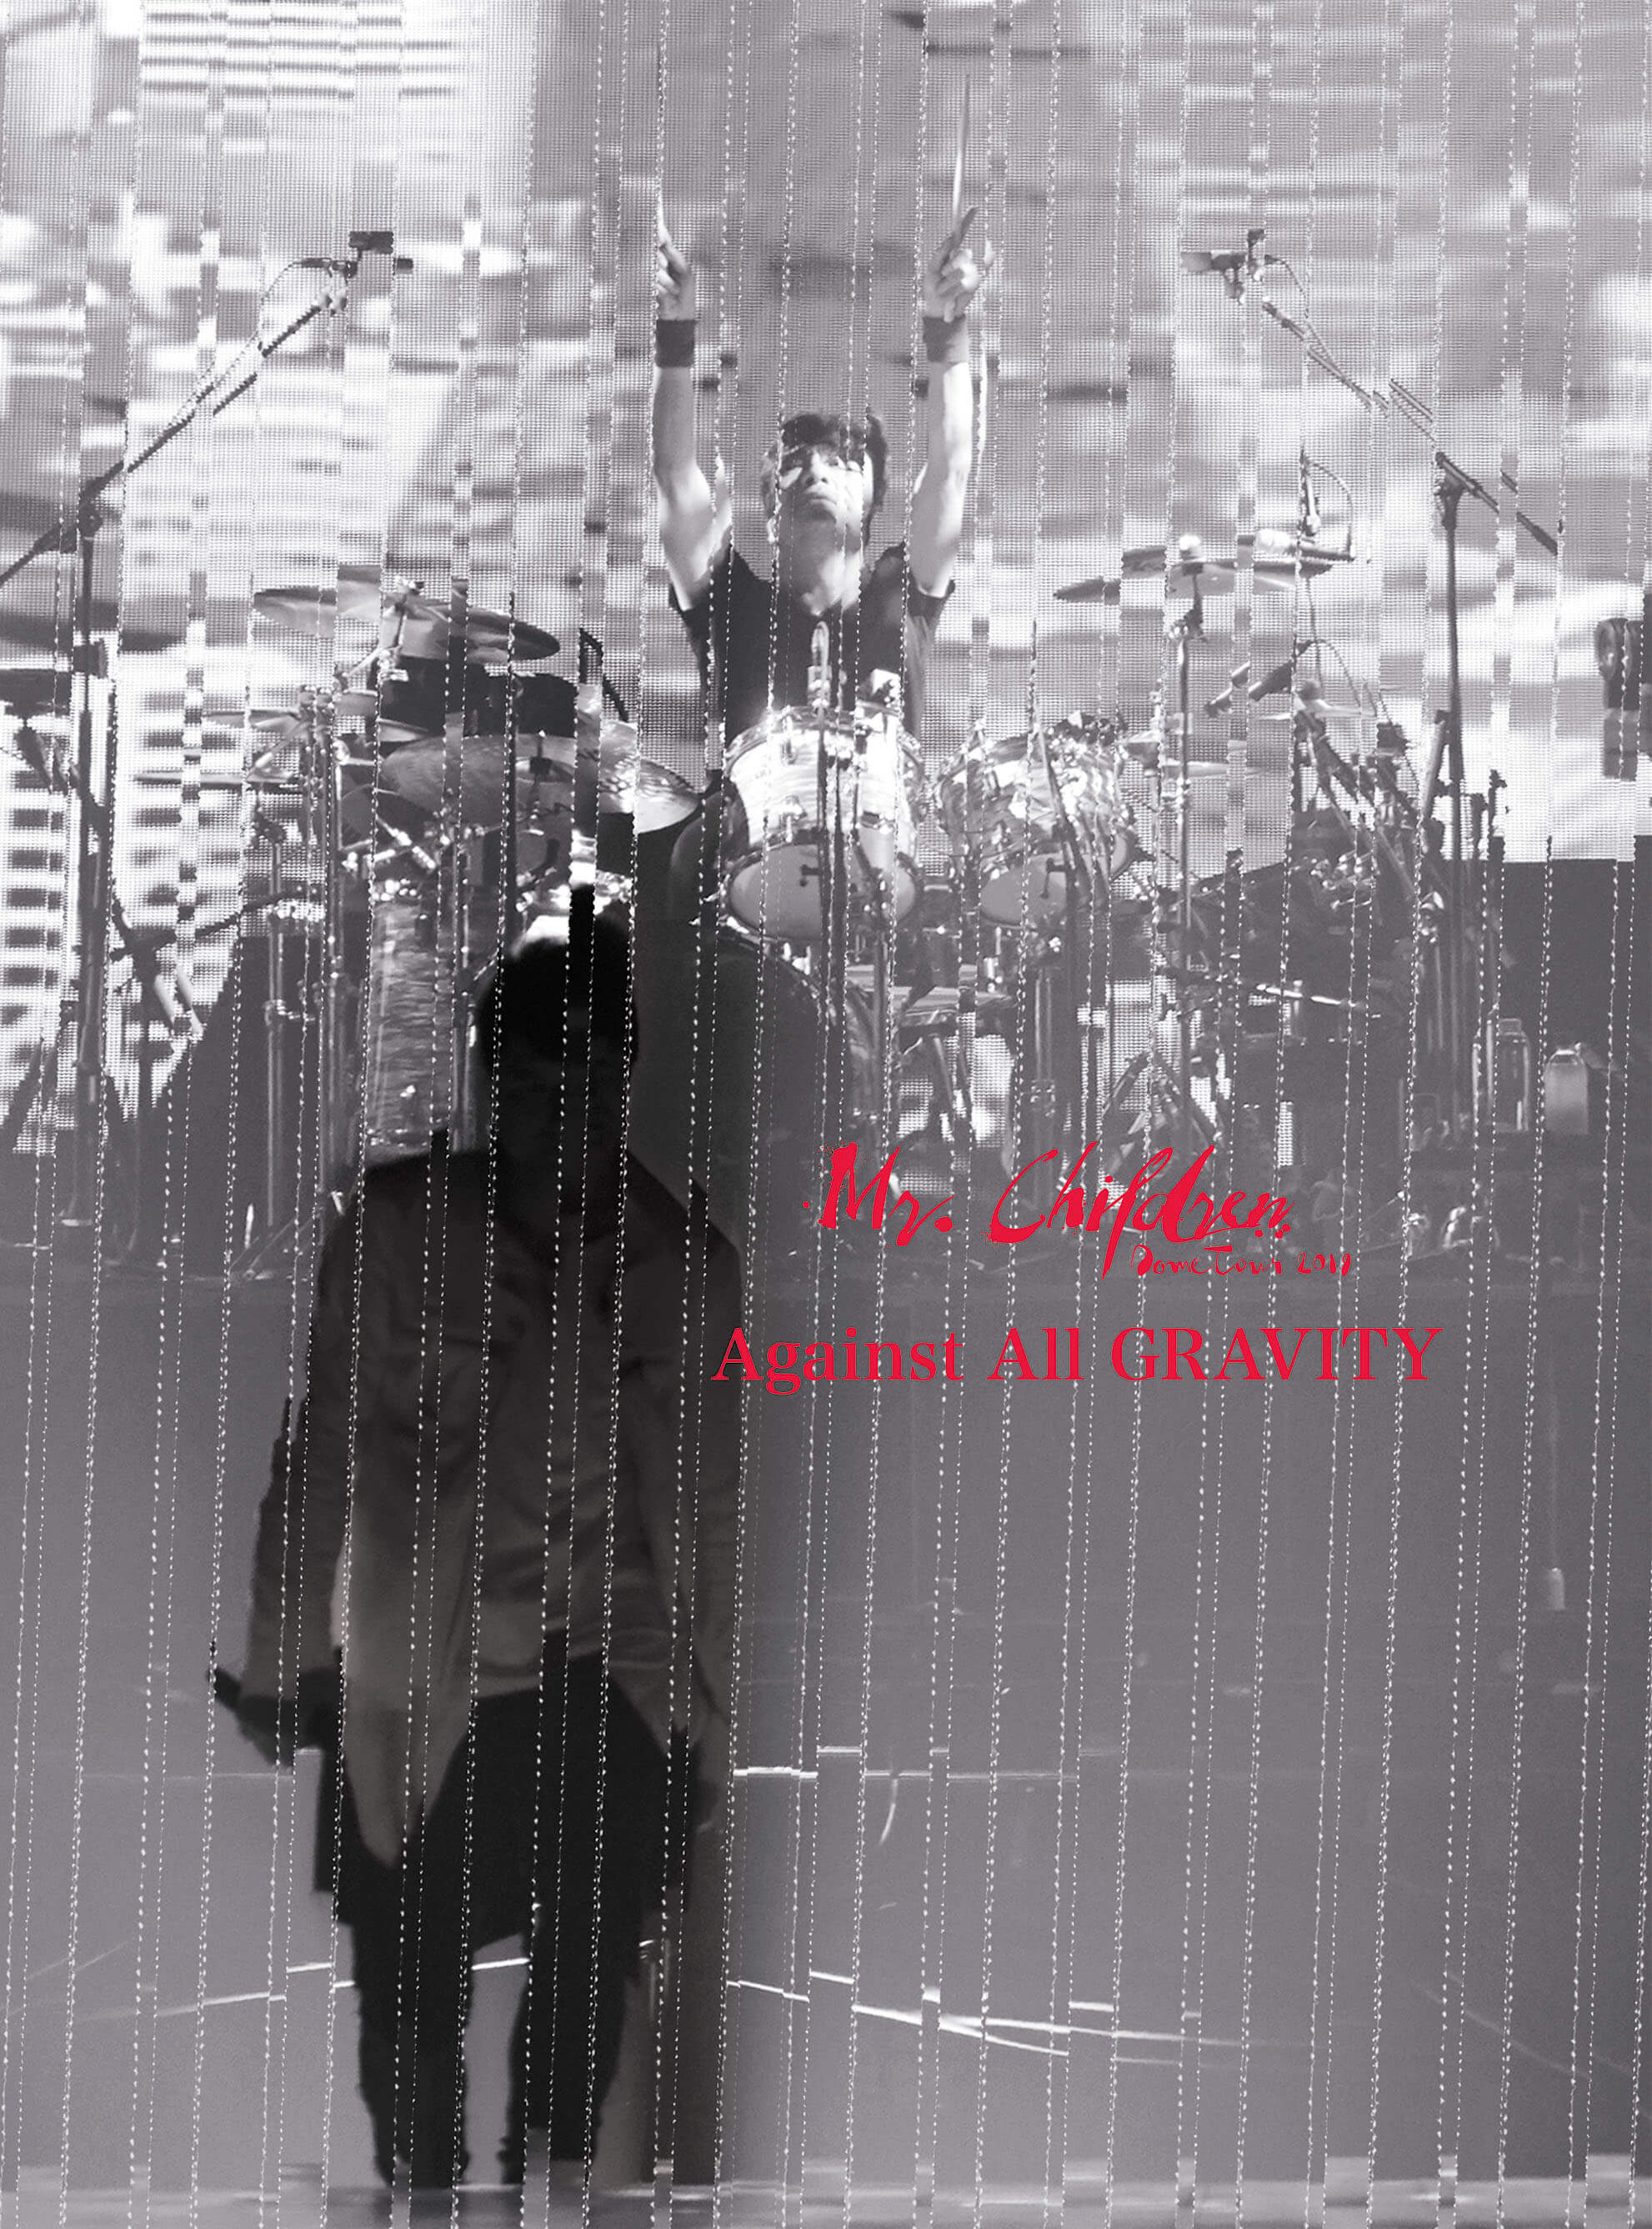 Mr Children Reveal Against All Gravity Live Dvd Blu Ray Cover Design Footage Moshi Moshi Nippon もしもしにっぽん